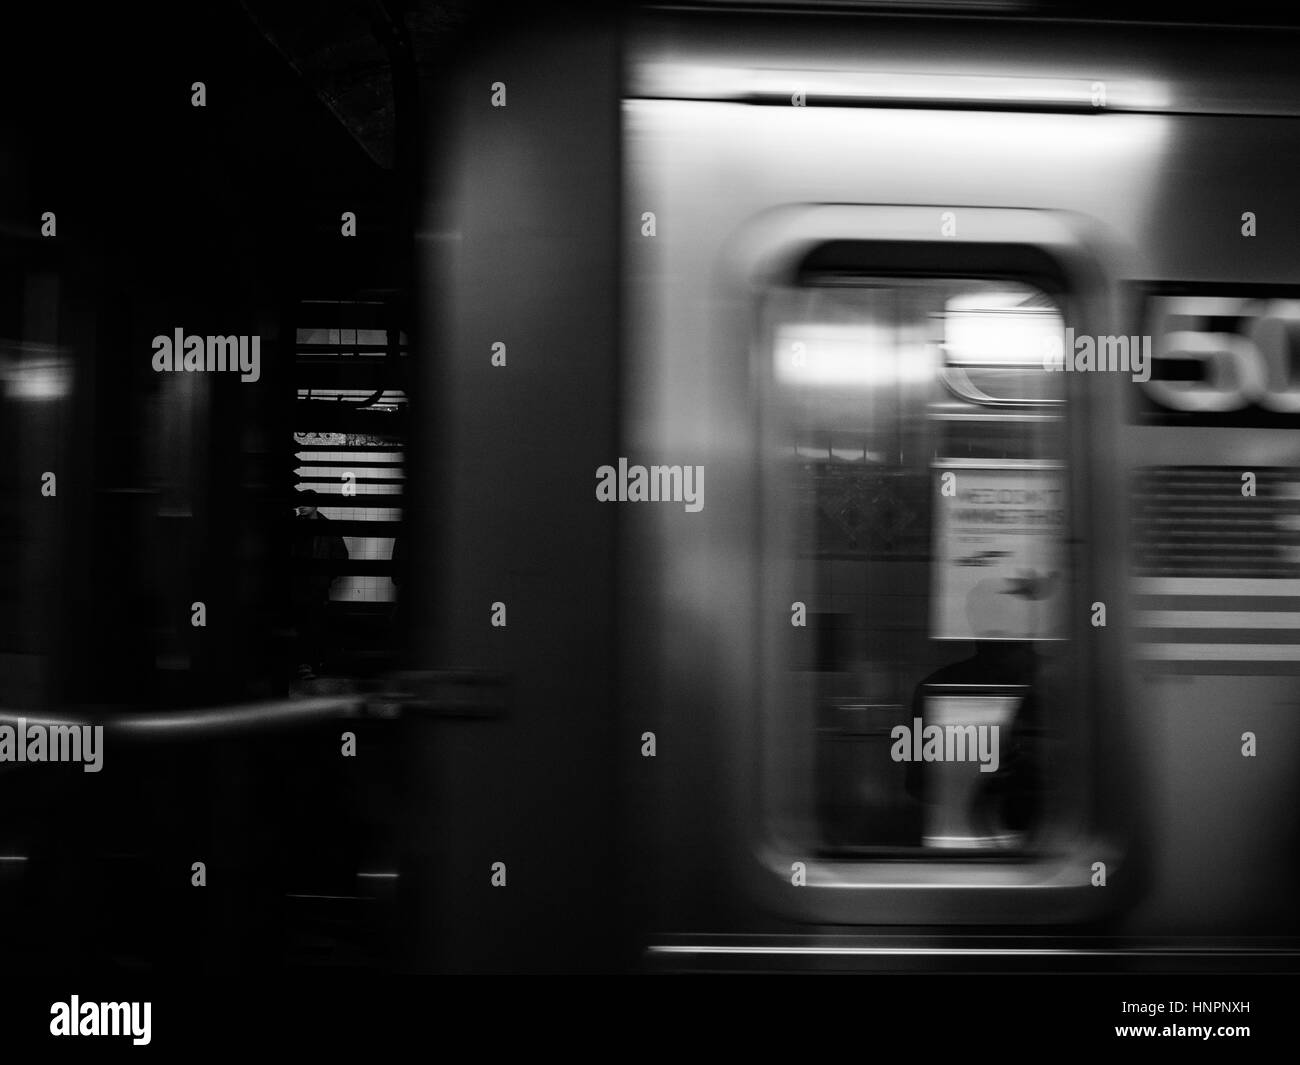 New York Subway System. A subway train rushes past. Stock Photo